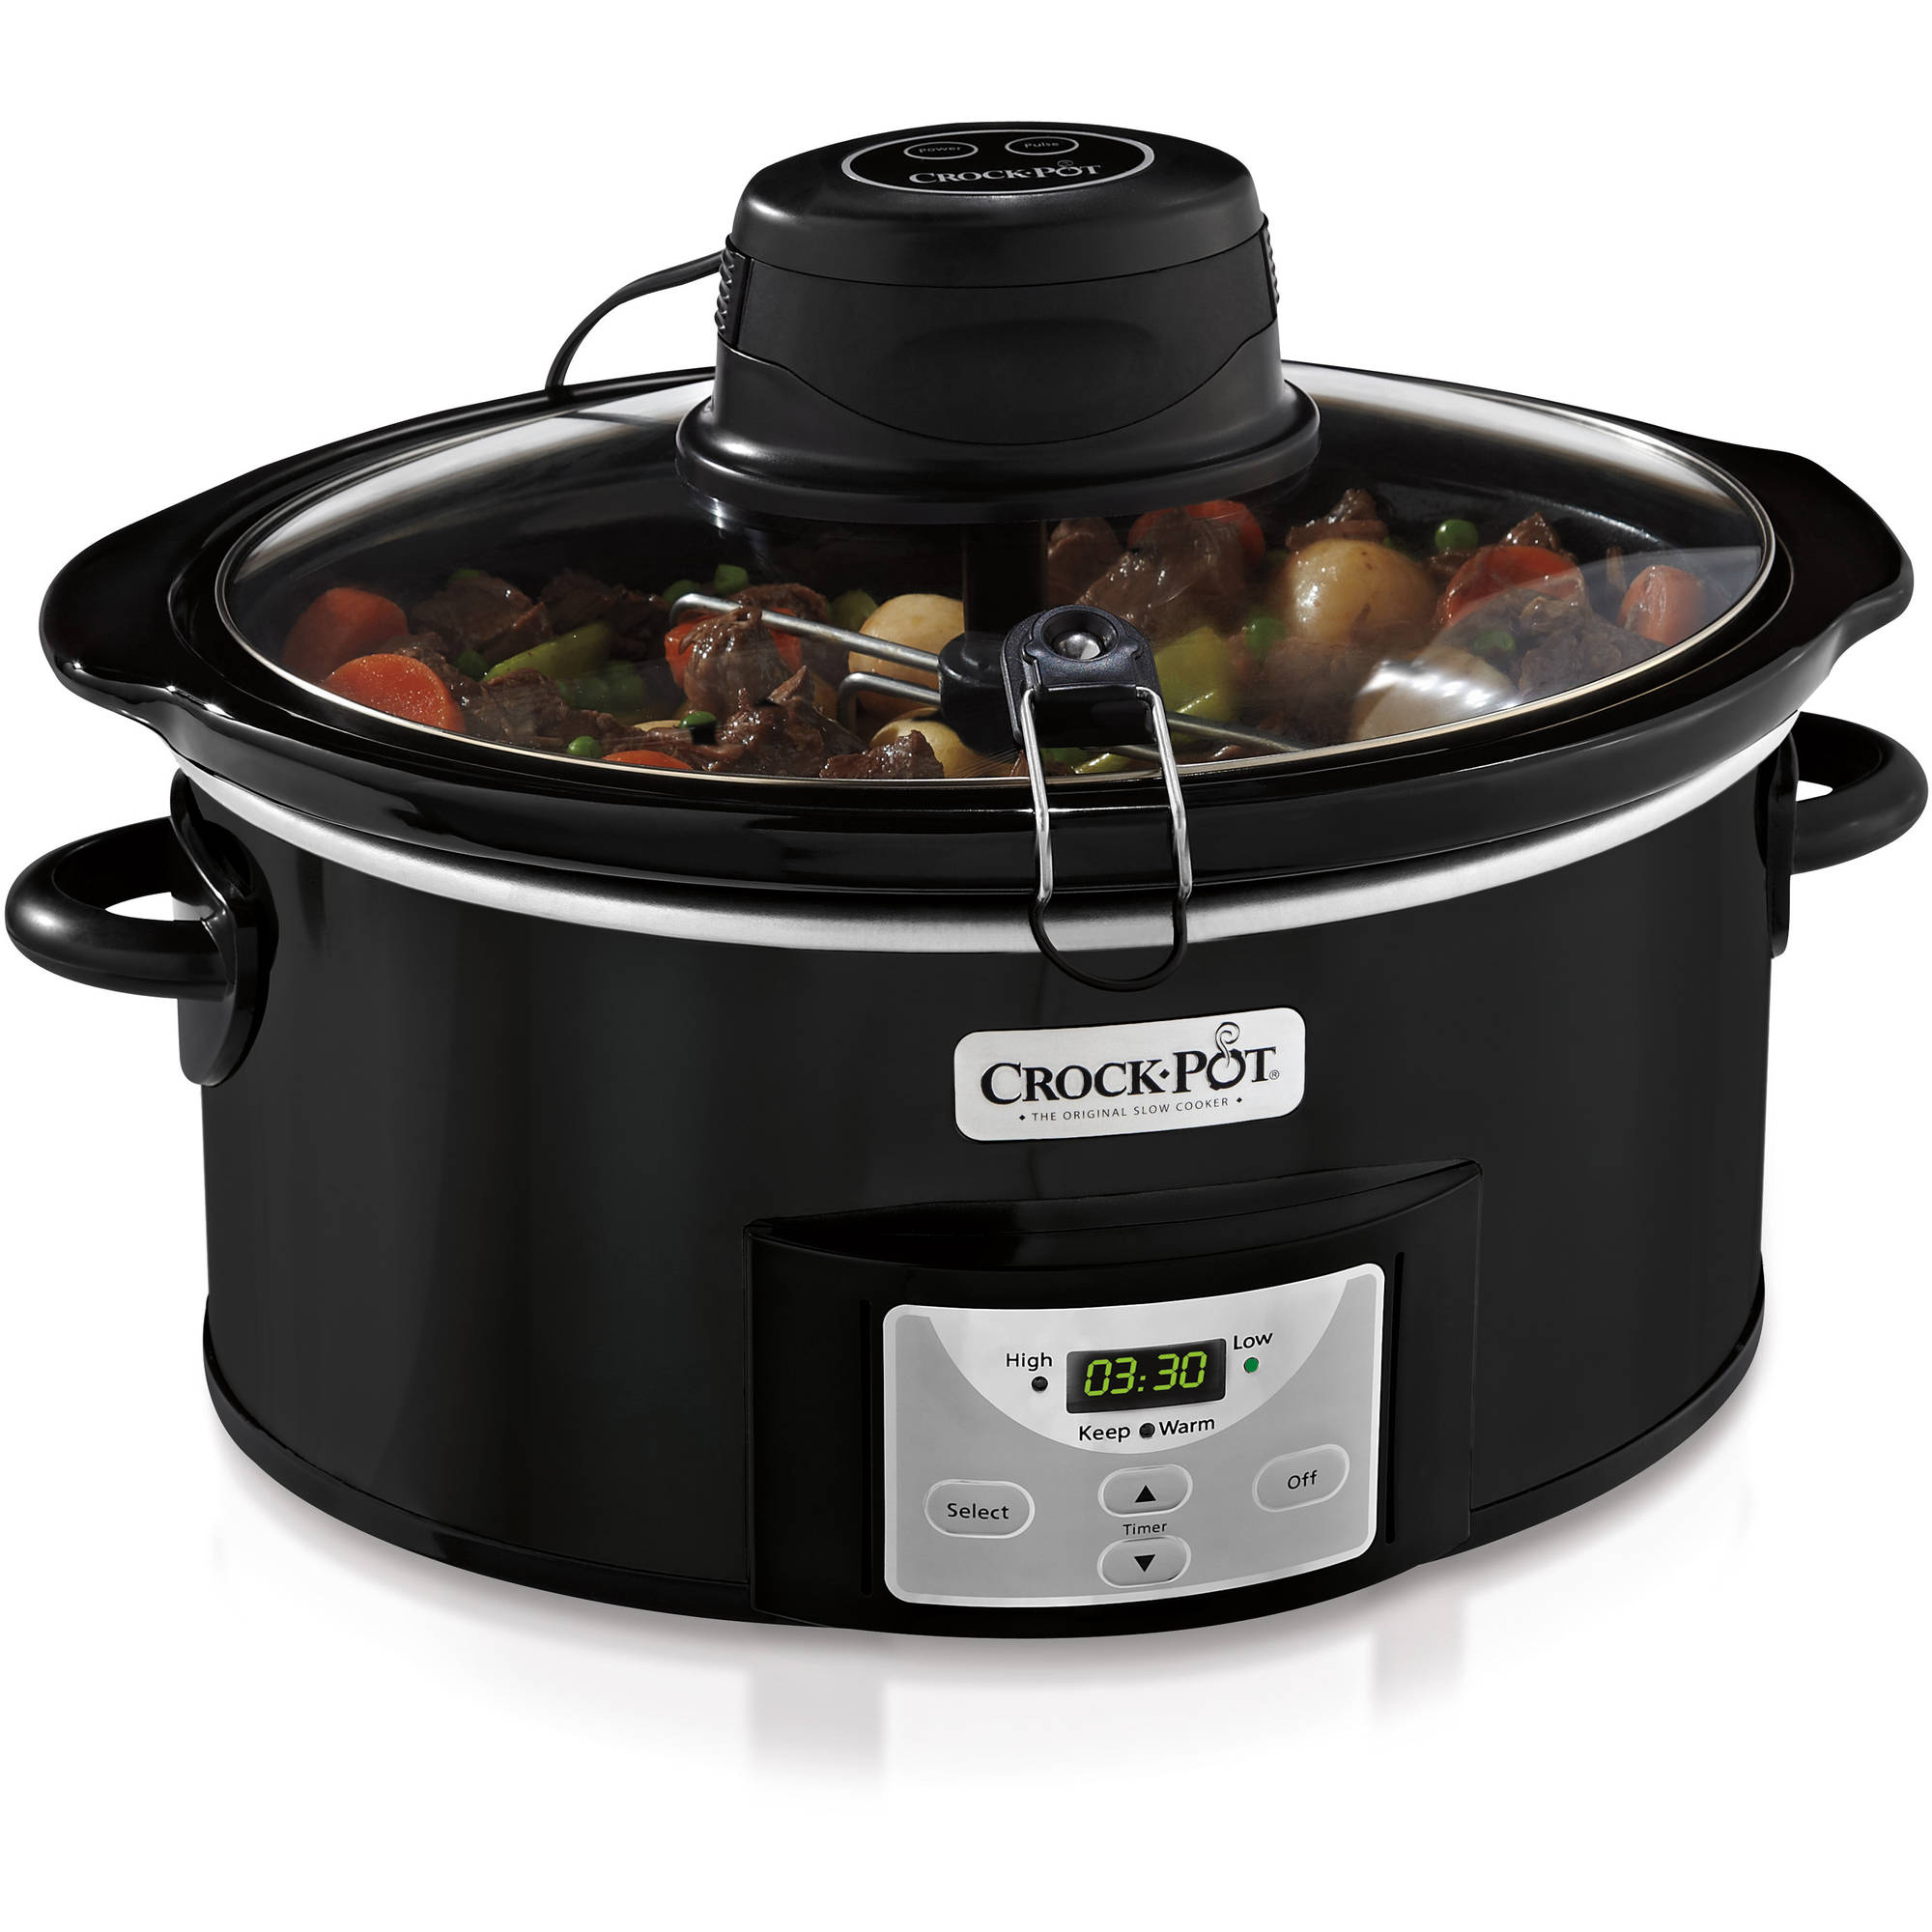 Crock-Pot Stir Automatic Stirring Slow Cooker, 6-Quart, Black - image 1 of 8